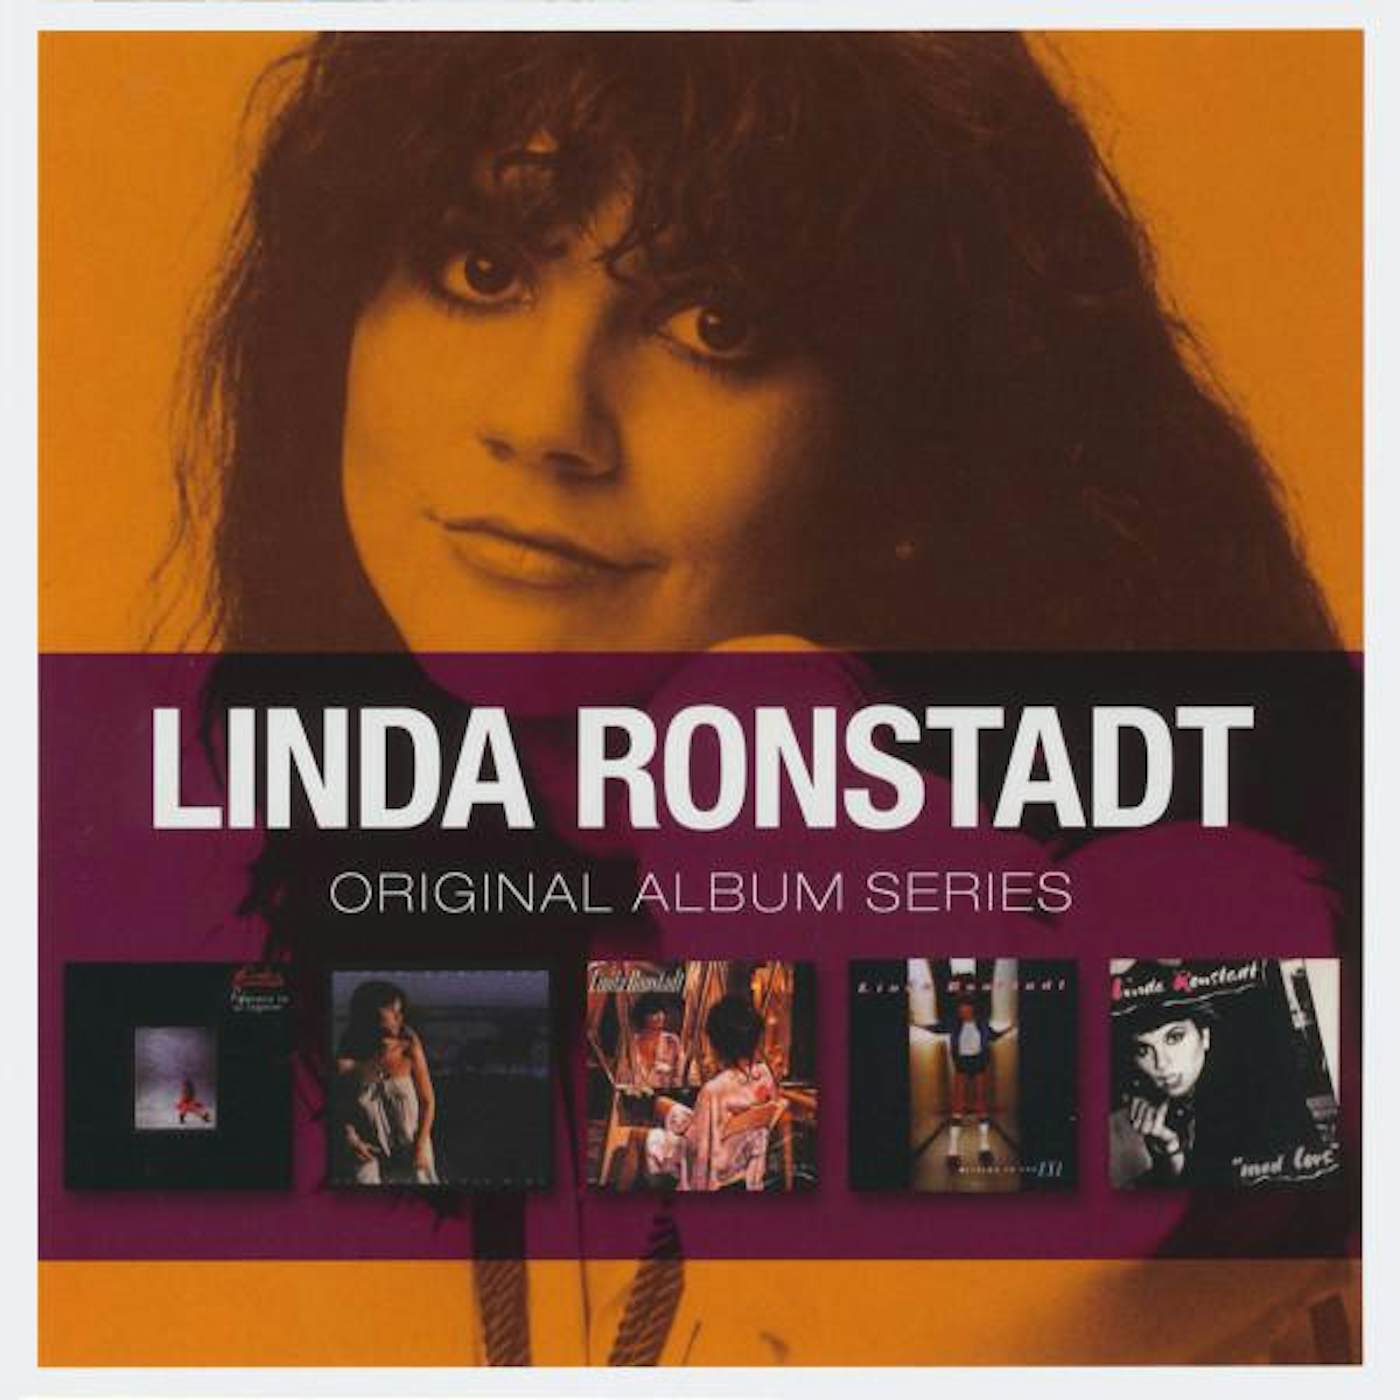 Linda Ronstadt ORIGINAL ALBUM SERIES CD